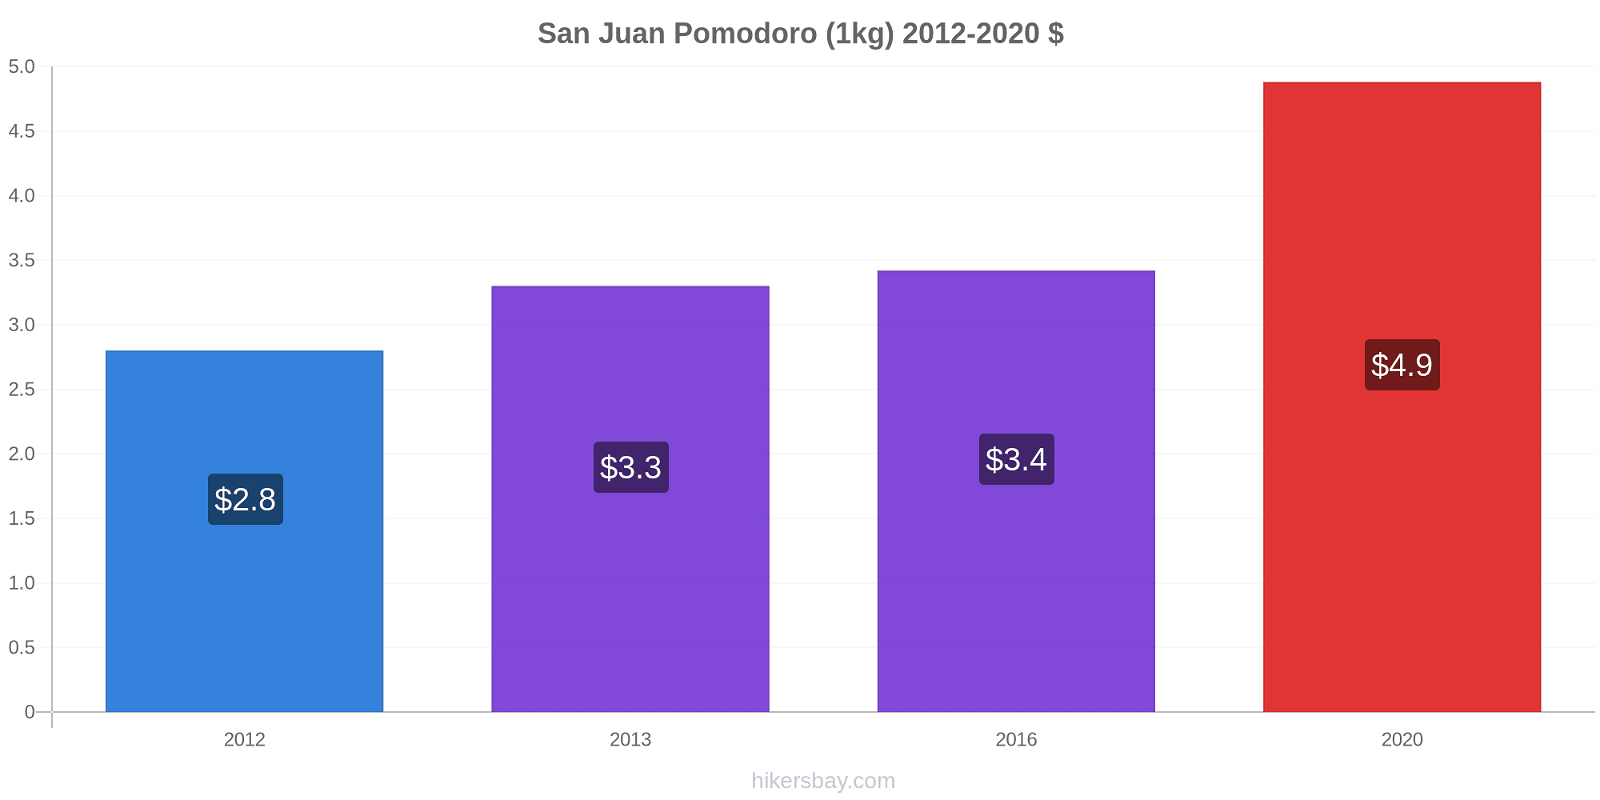 San Juan variazioni di prezzo Pomodoro (1kg) hikersbay.com